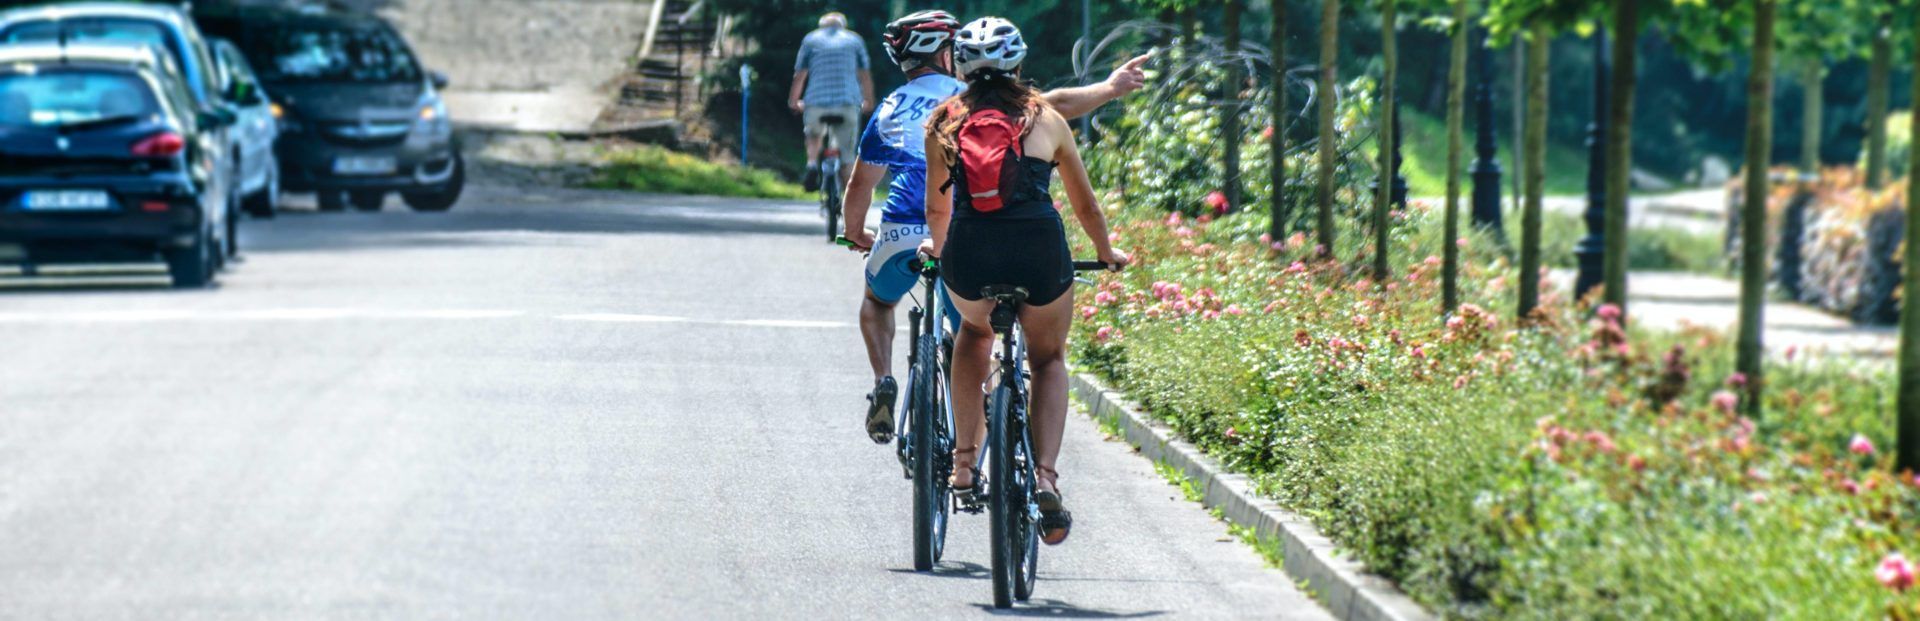 turisme sostenible amb bicicletes